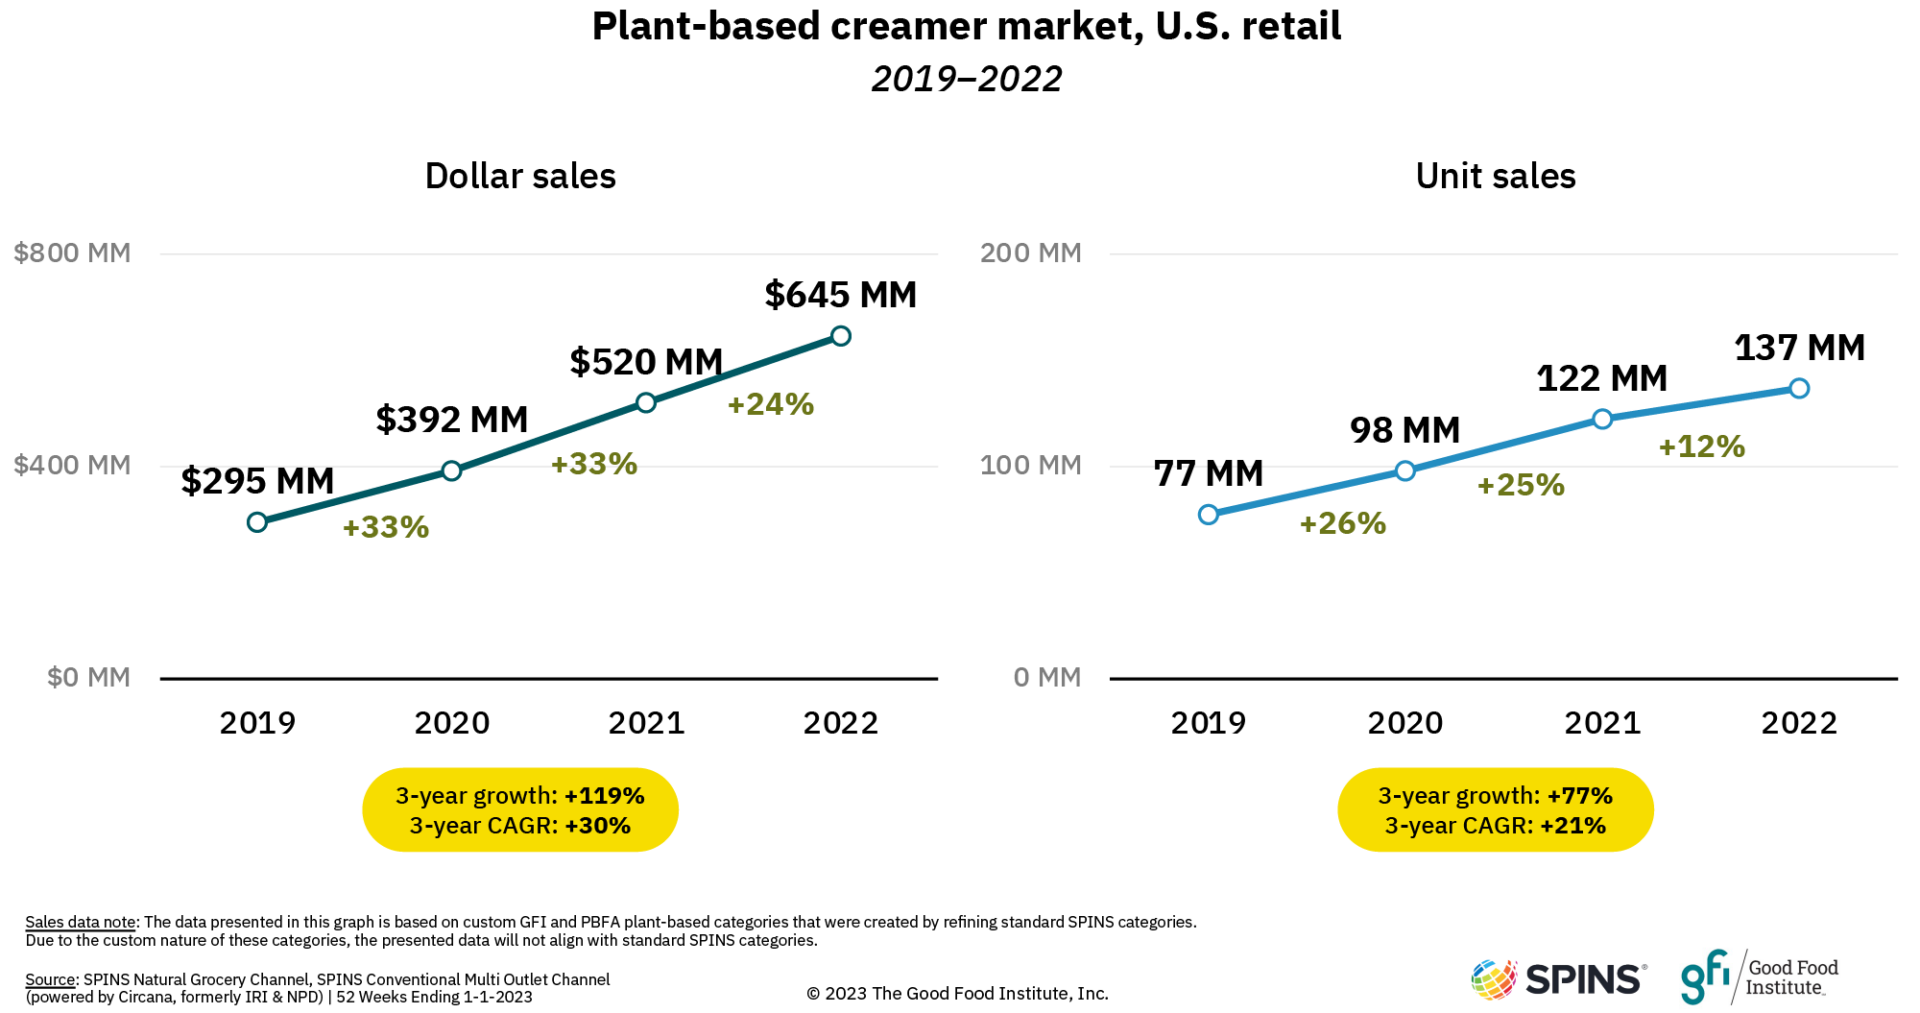 Summary of plant-based creamer sales data